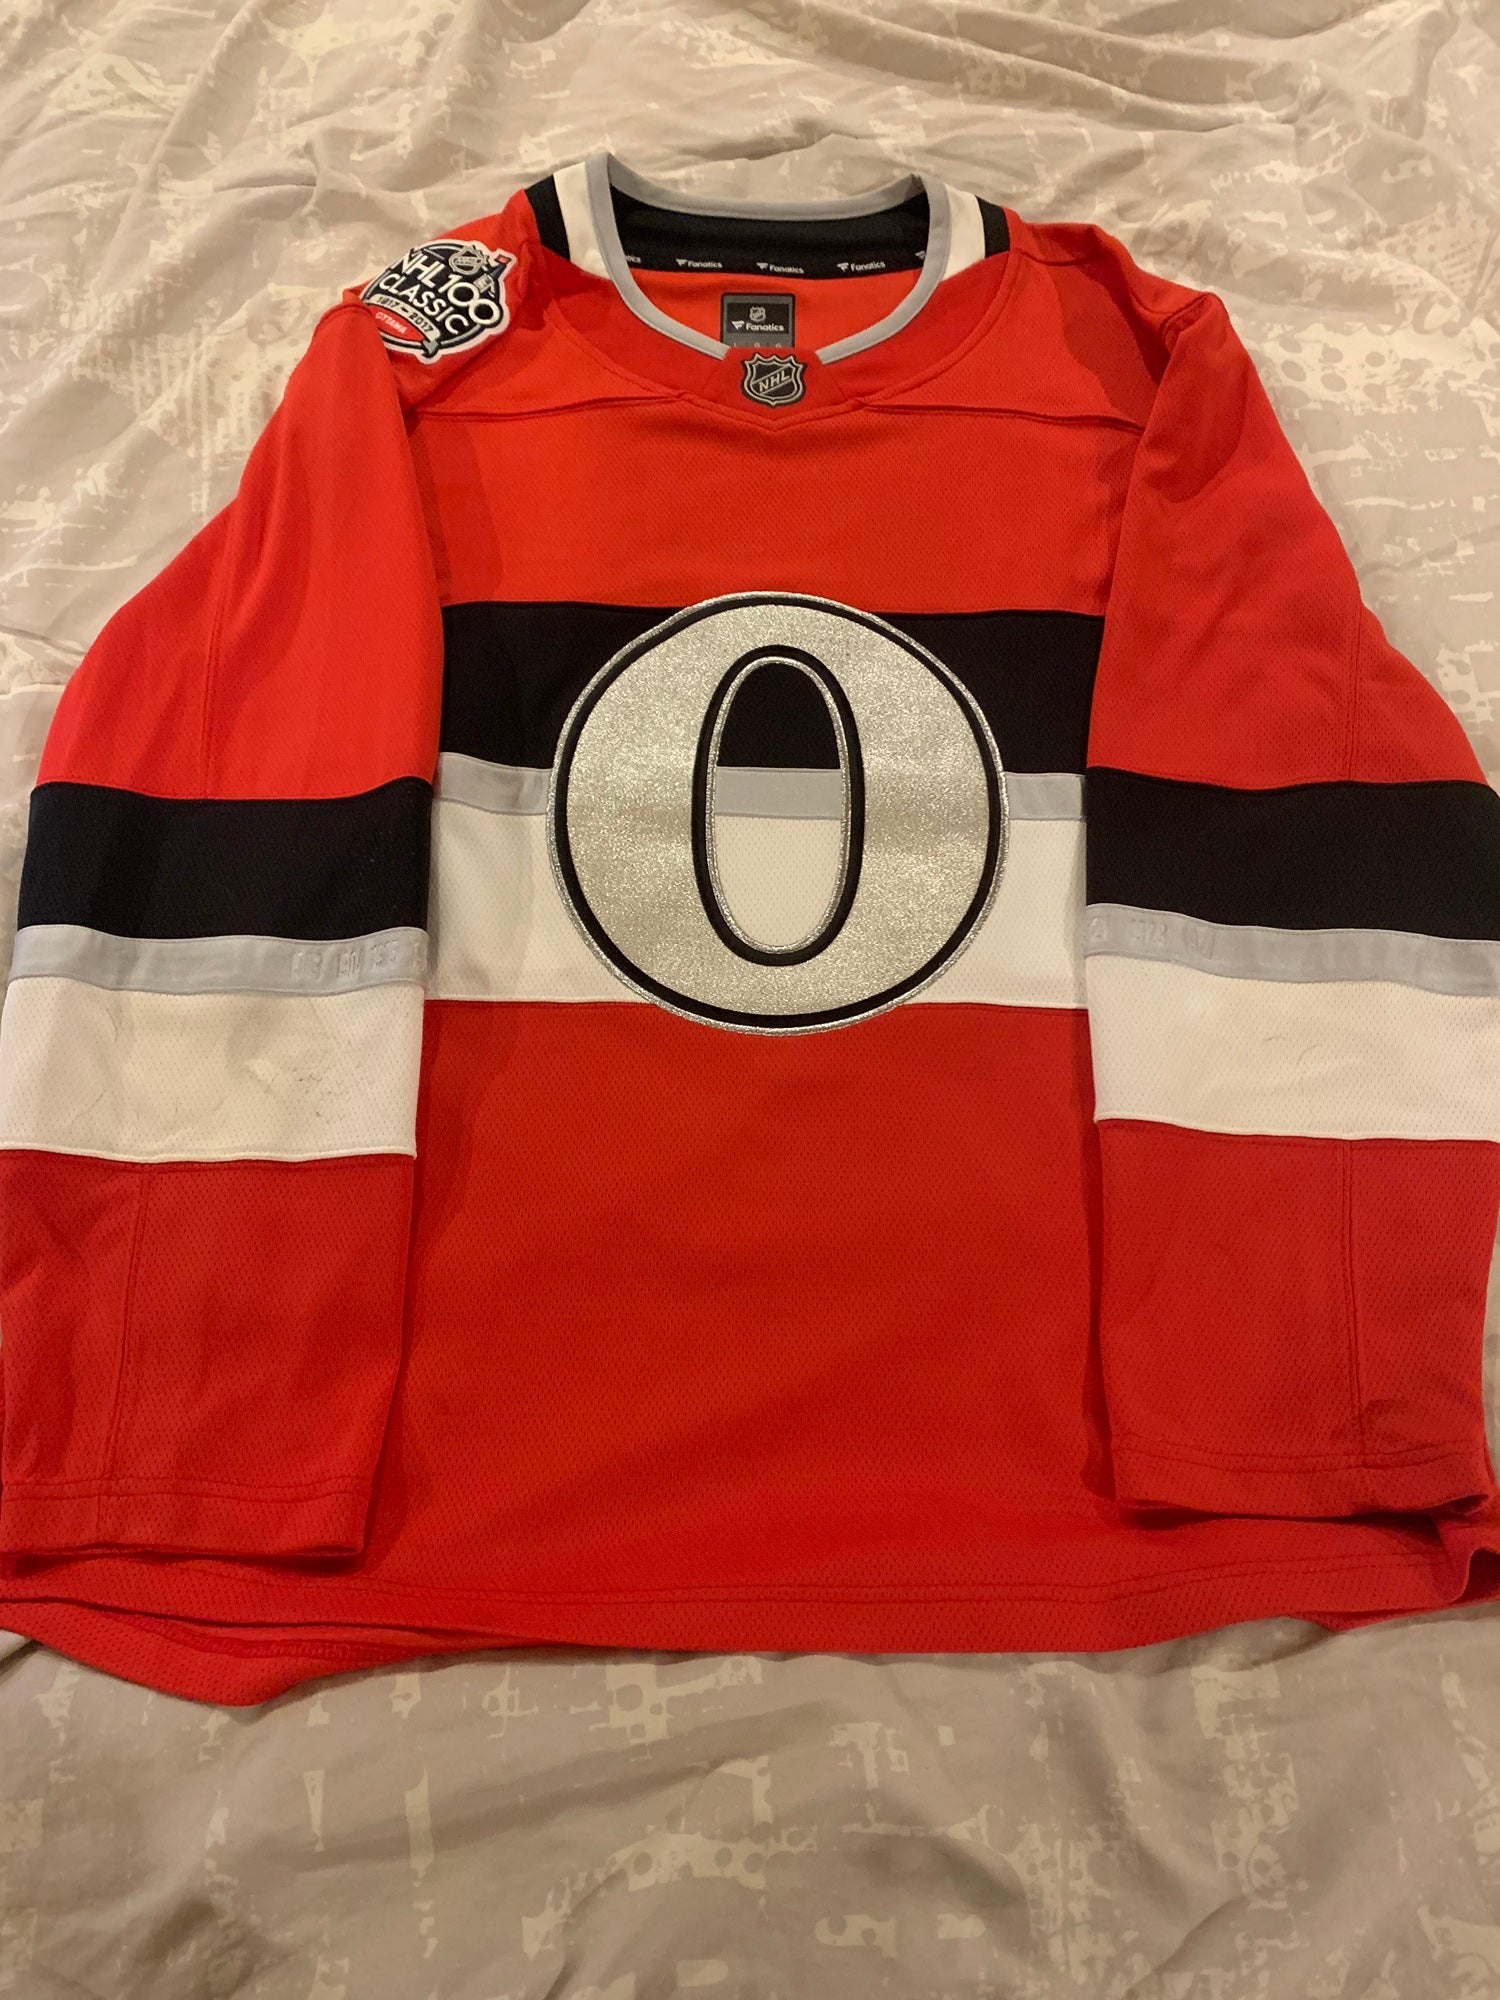 Ottawa Senators Centennial Jersey for Sale : r/hockeyjerseys